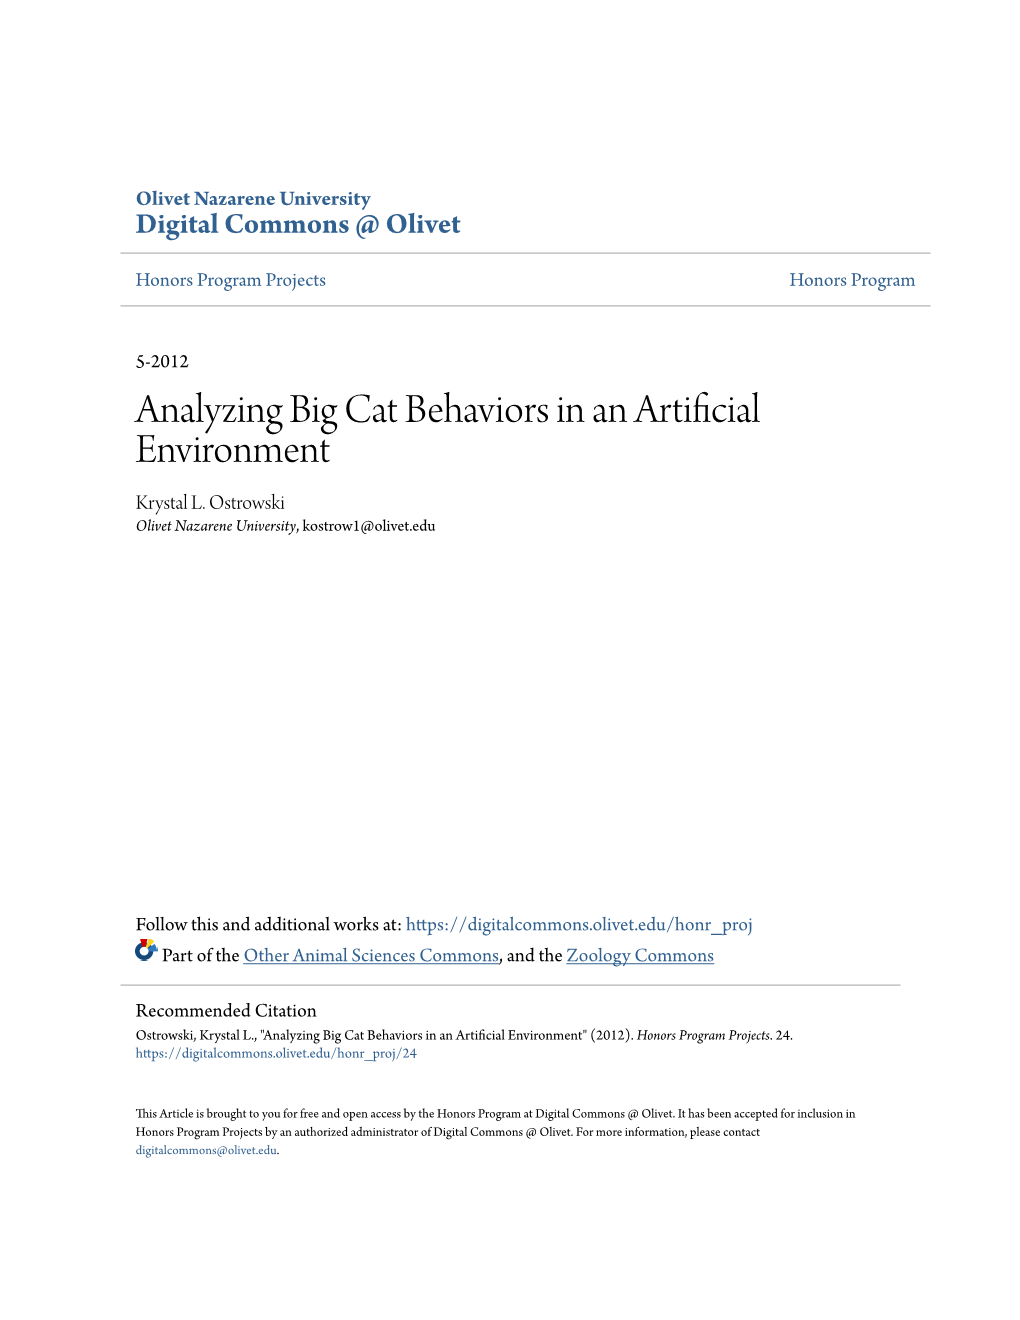 Analyzing Big Cat Behaviors in an Artificial Environment Krystal L